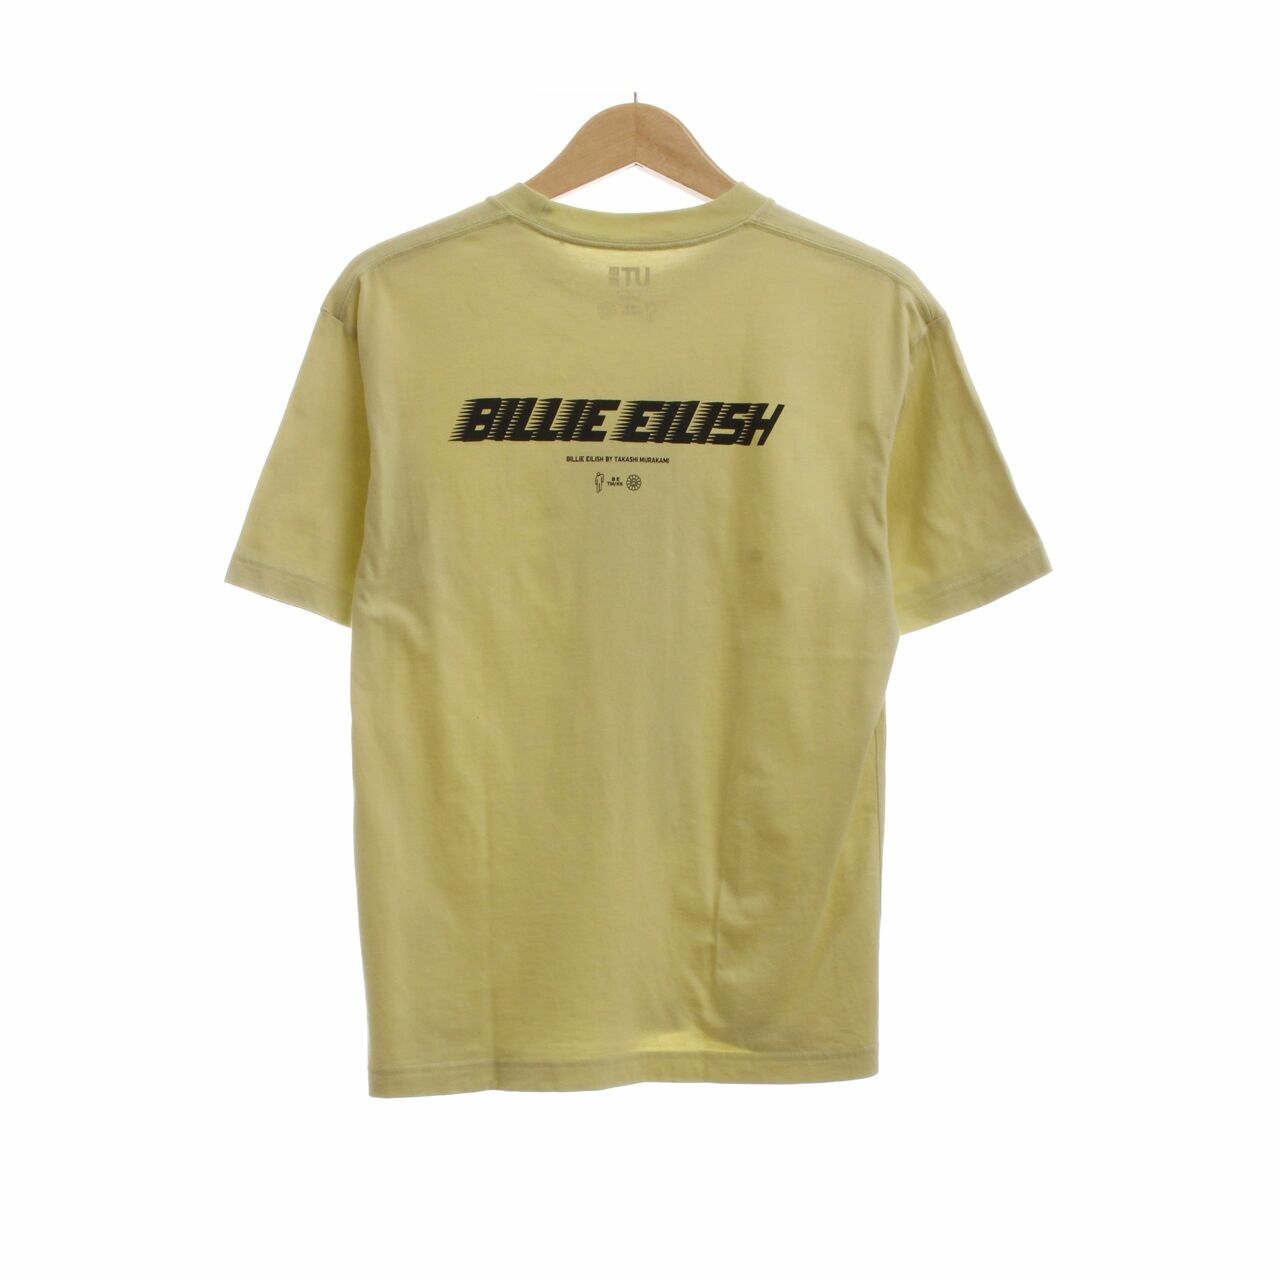 UNIQLO x Billie Eilish By Takashi Murakami Yellow T-Shirt